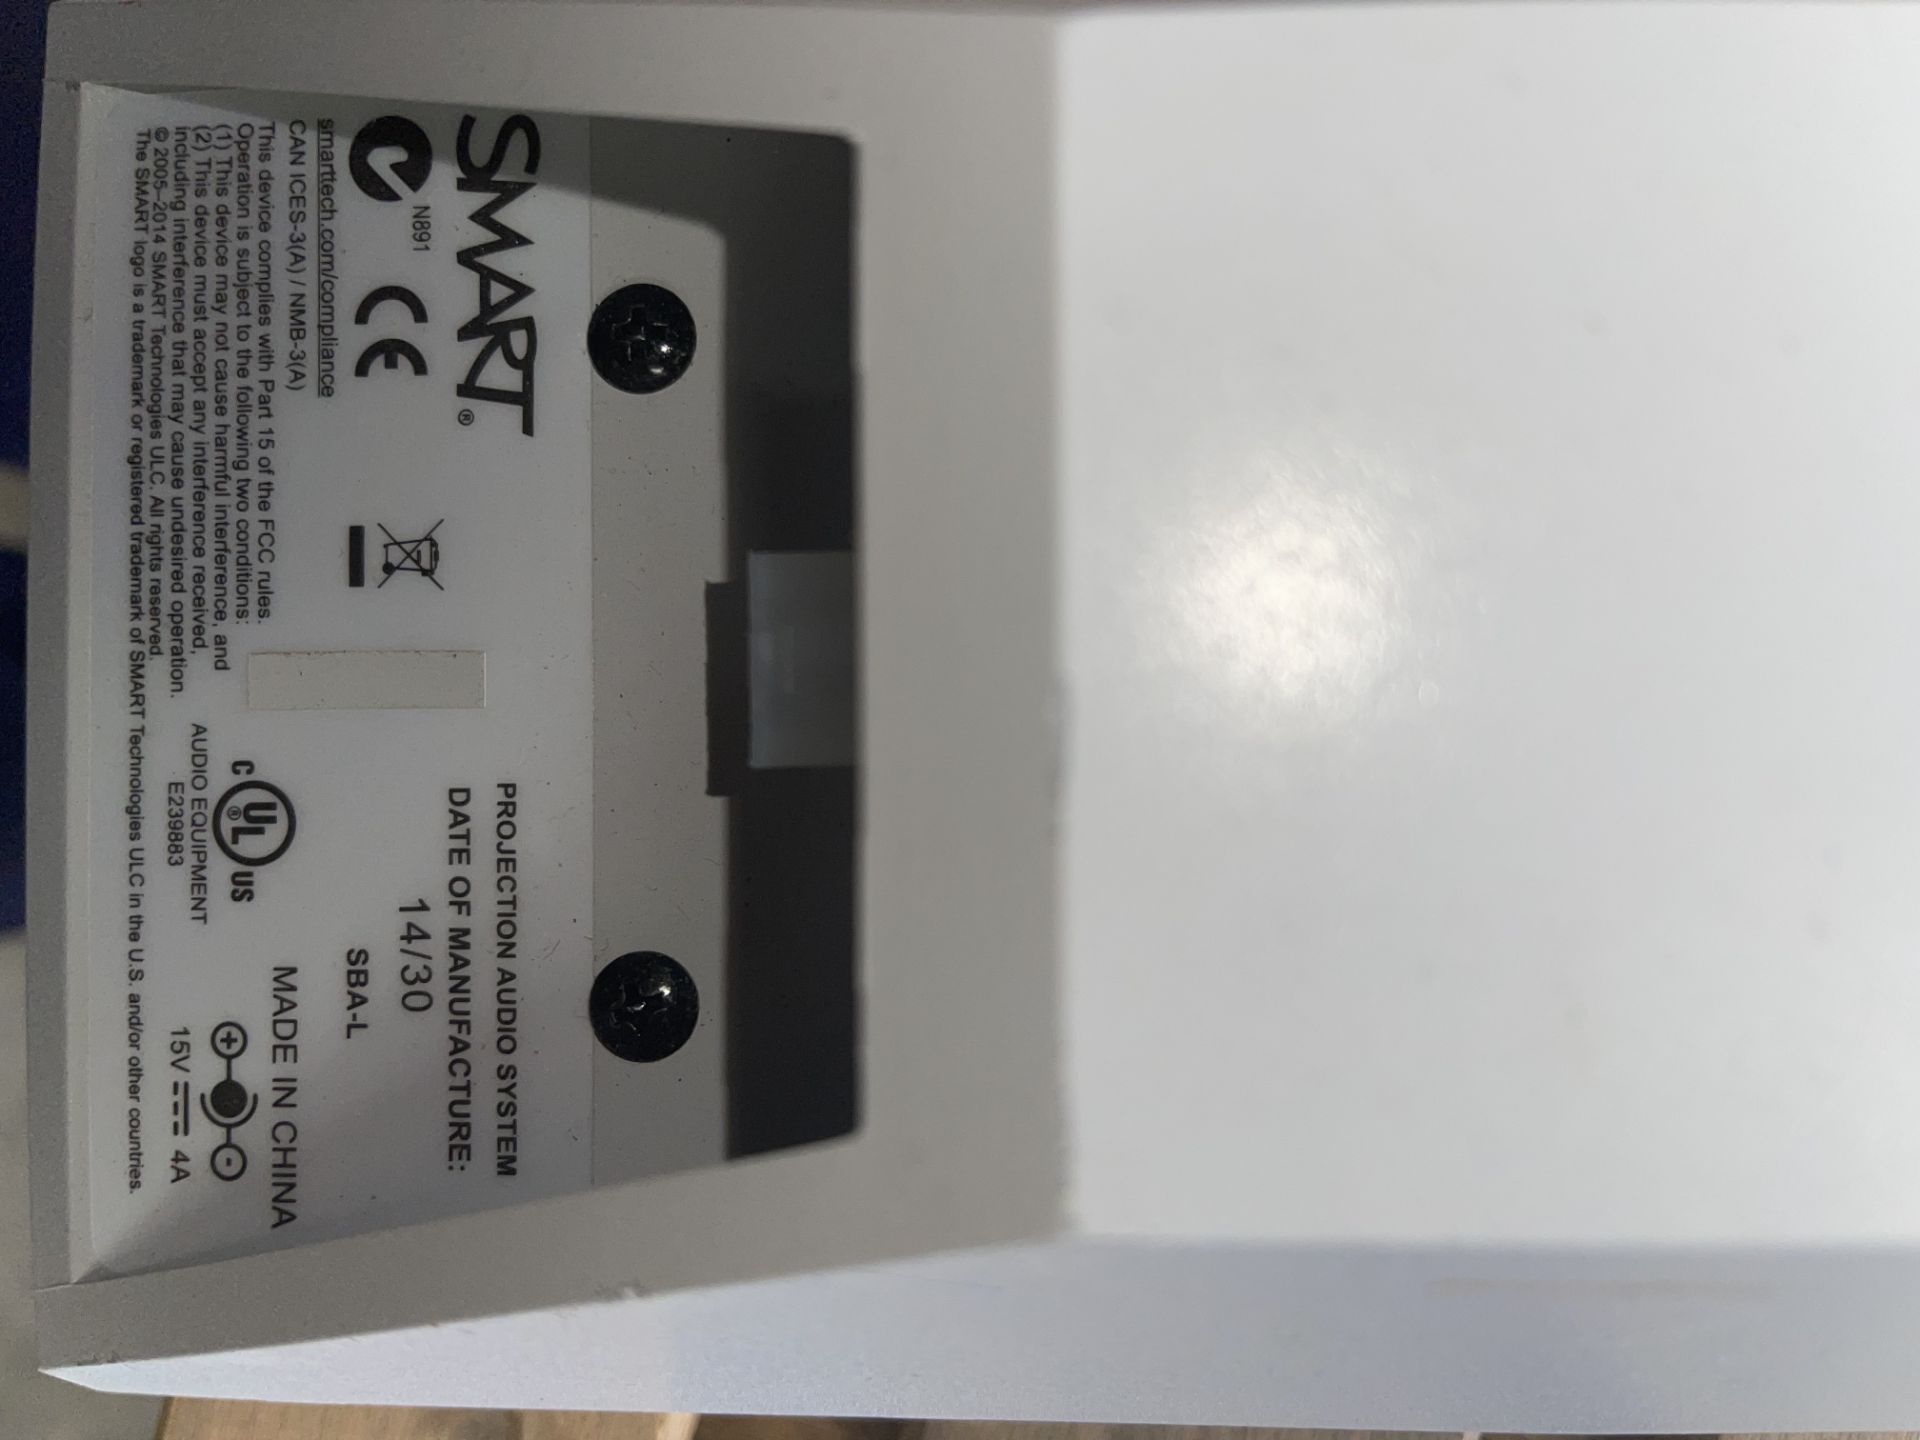 9 x SMART SBA-L speakers - Image 2 of 2